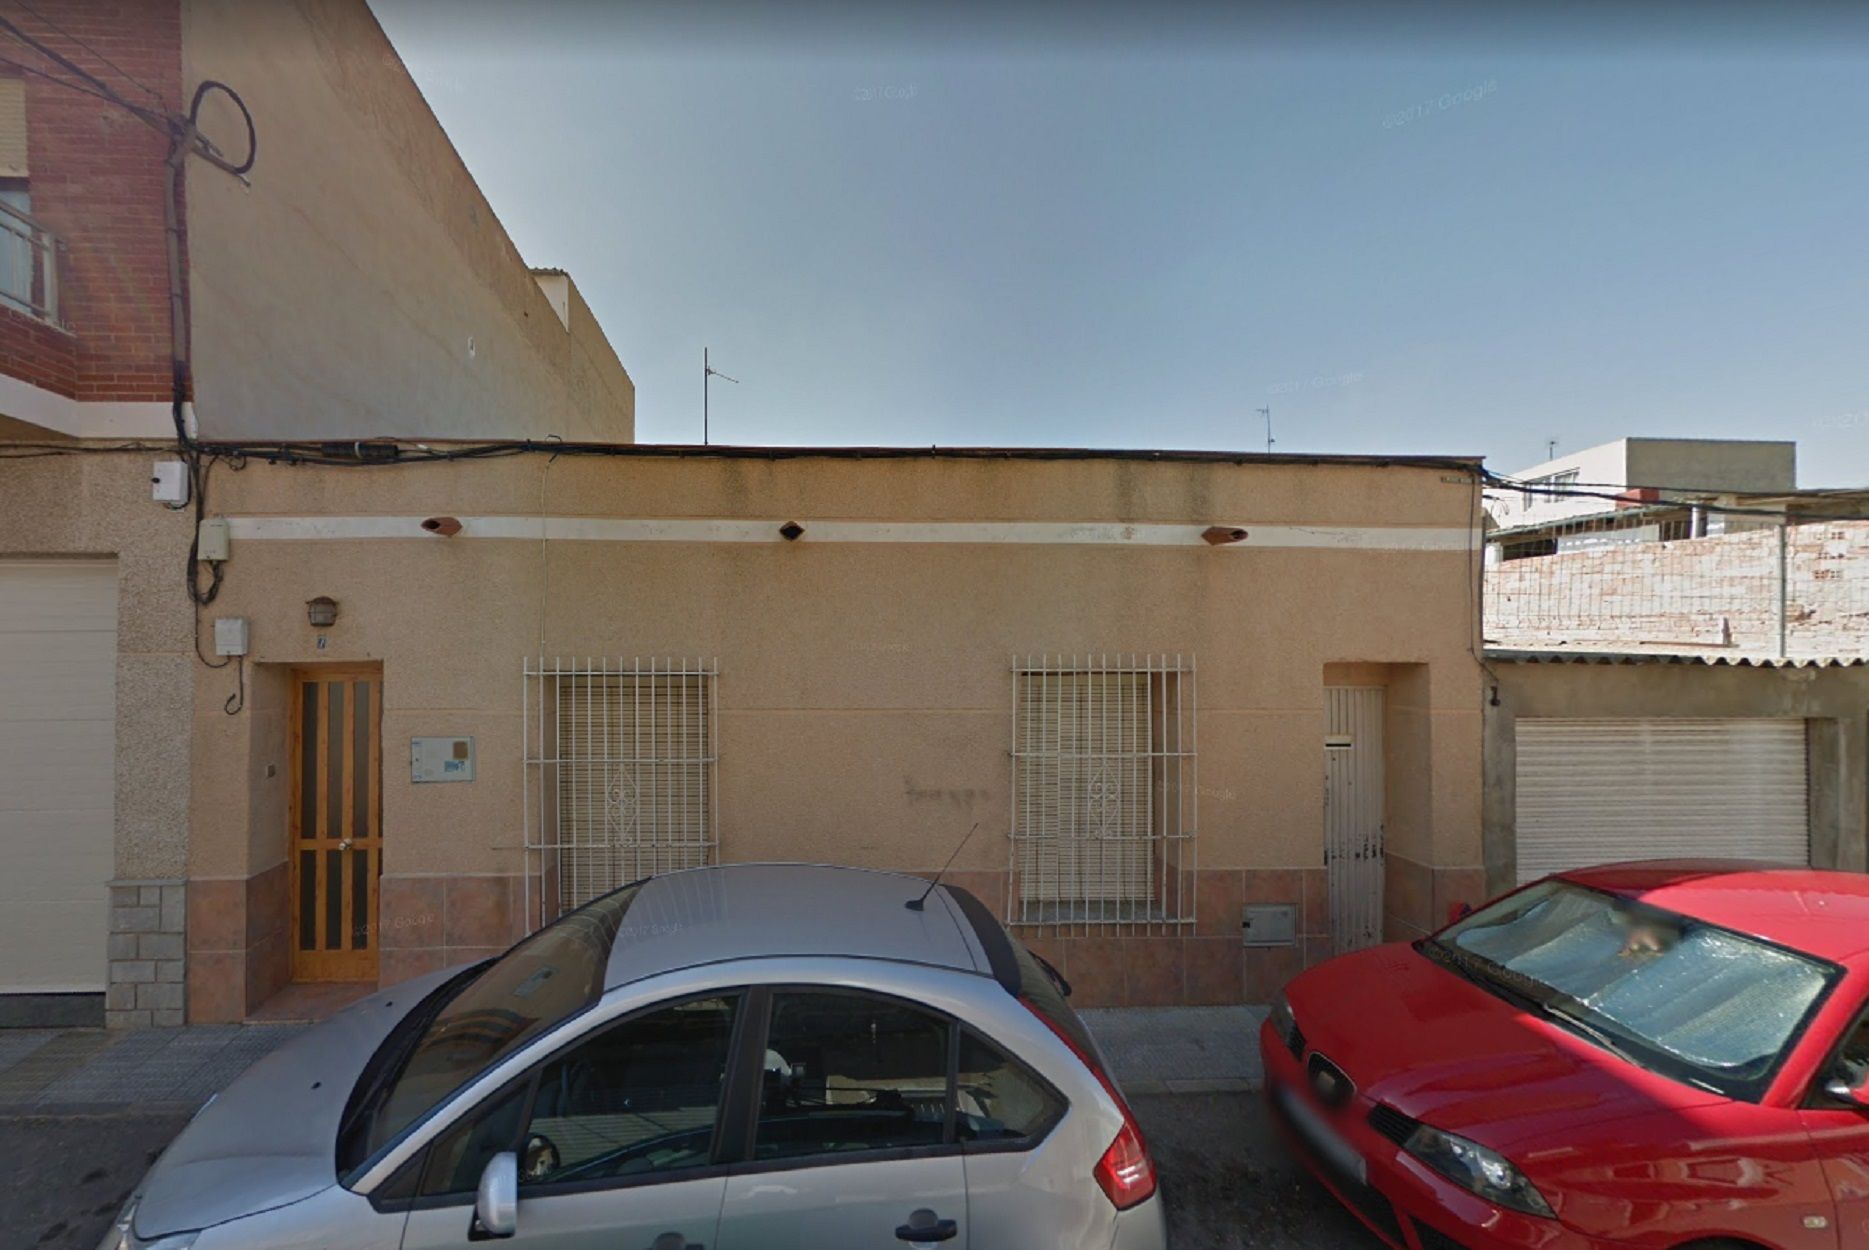 Casa homicidio Churra - Murcia / Google Maps